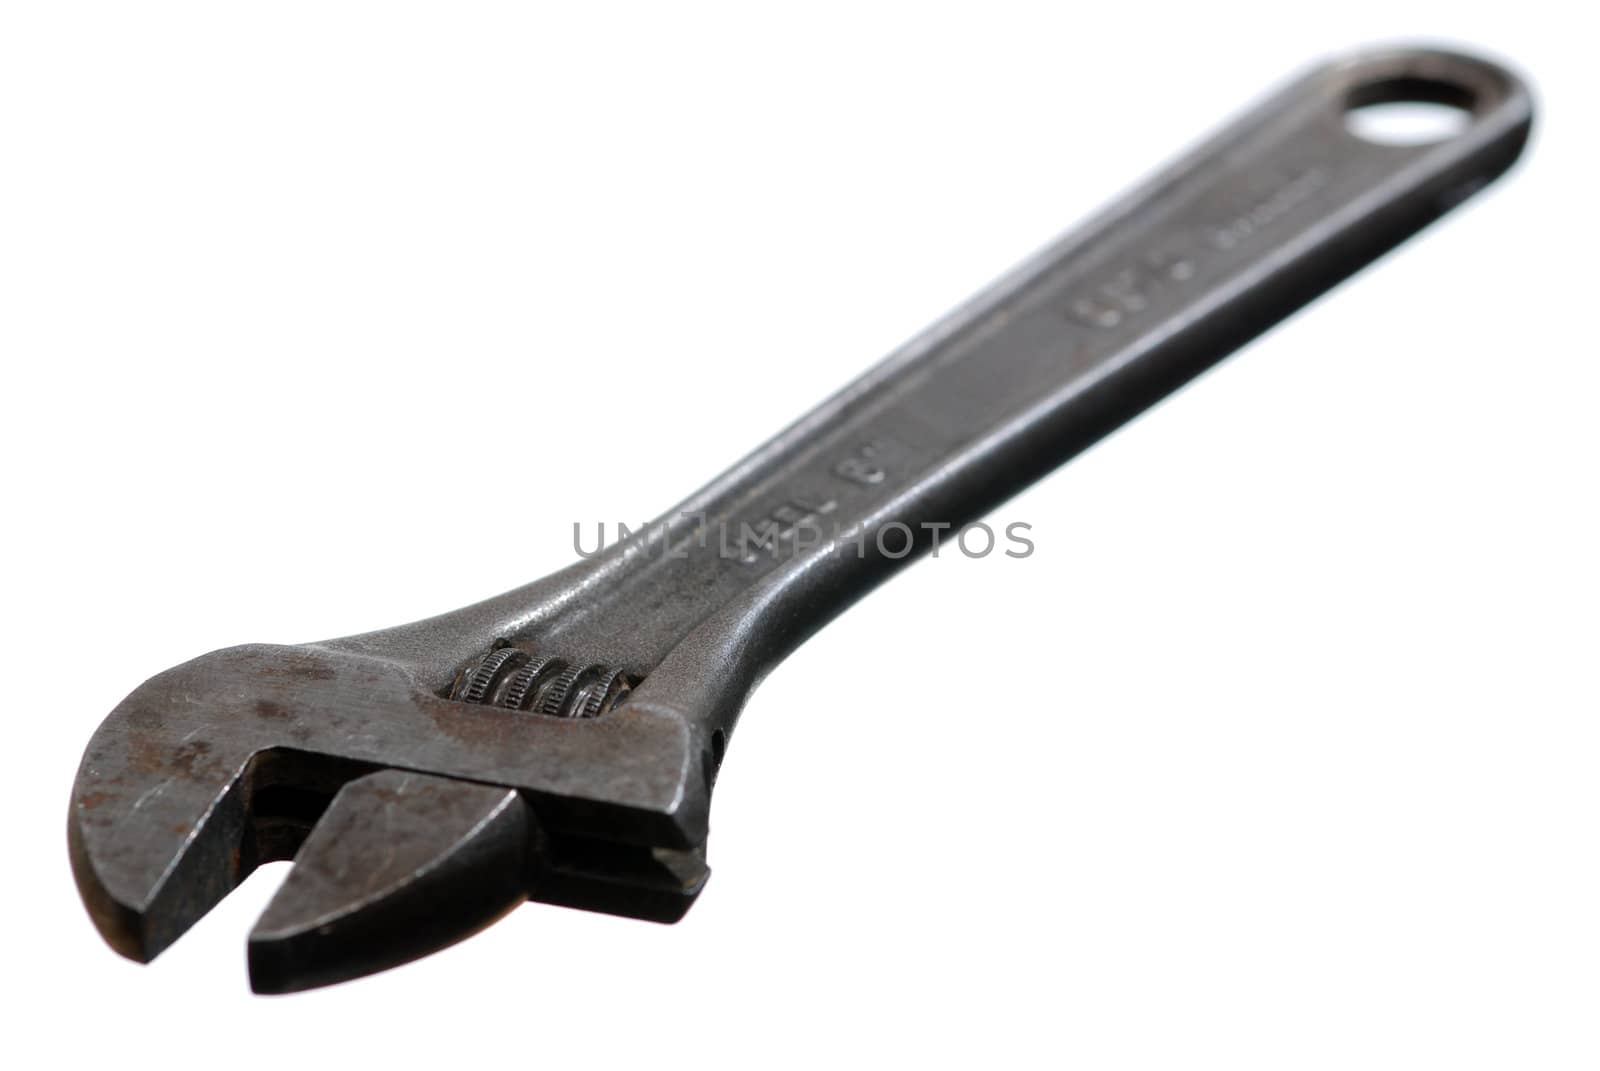 Adjustable Wrench isolated on white background.